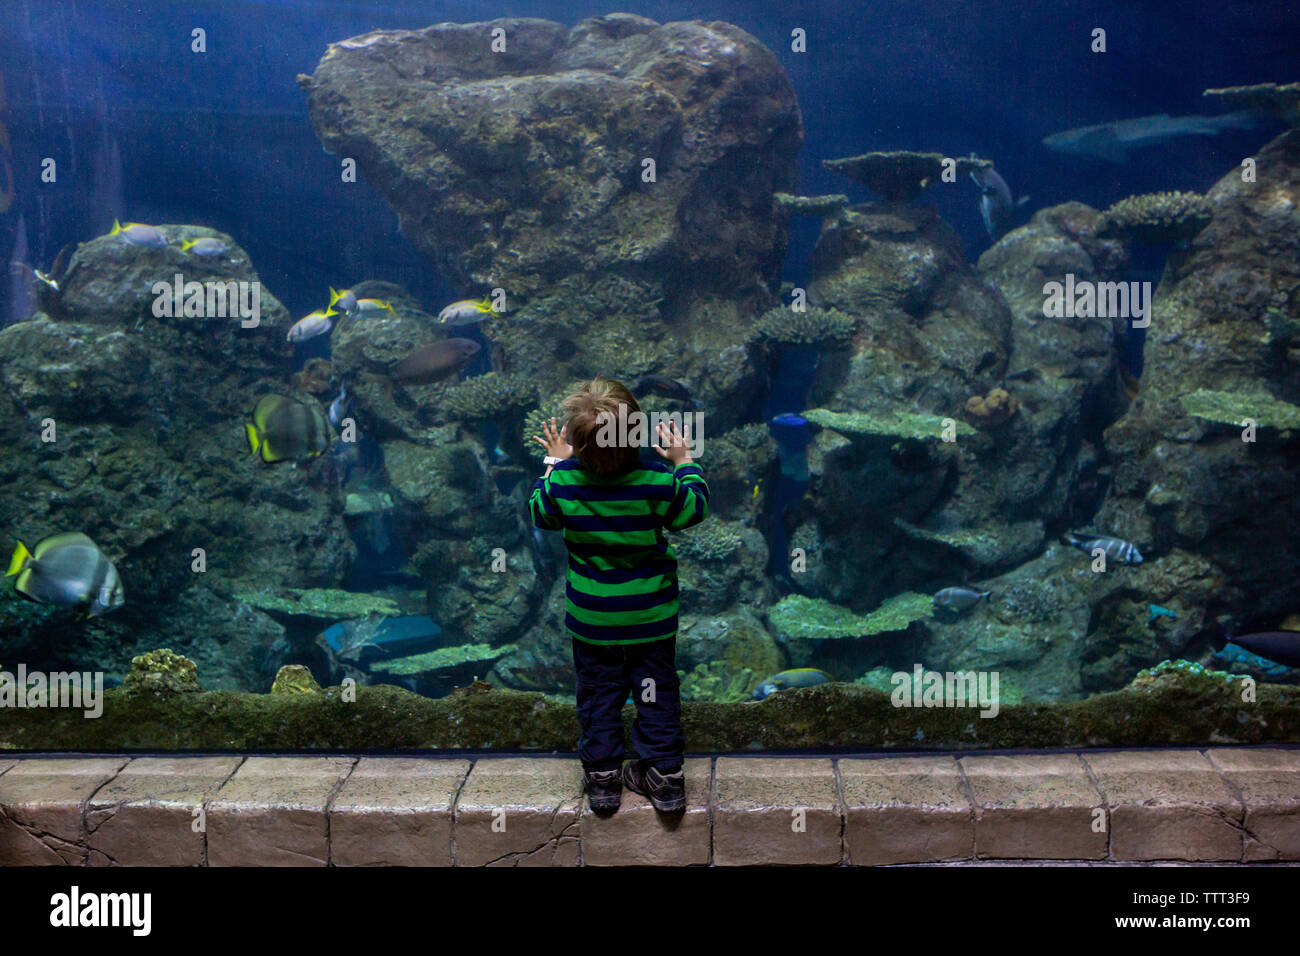 Little boy looking at fish in large aquarium tank Stock Photo